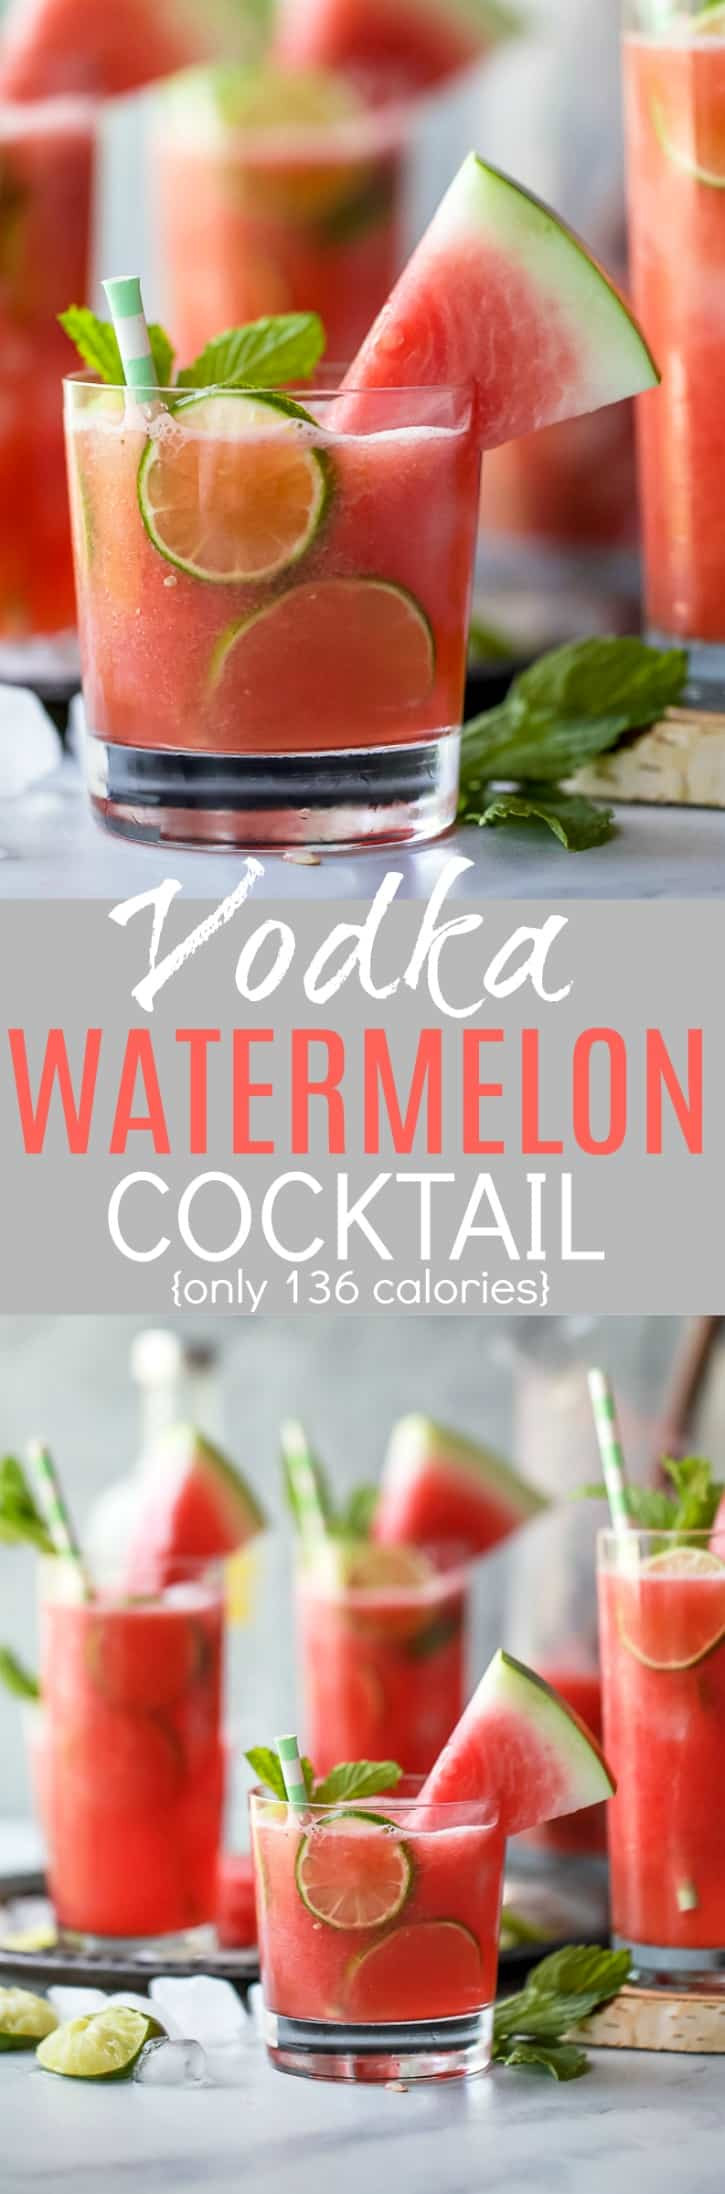 Easy Summer Vodka Drinks
 Vodka Watermelon Cocktail Recipe